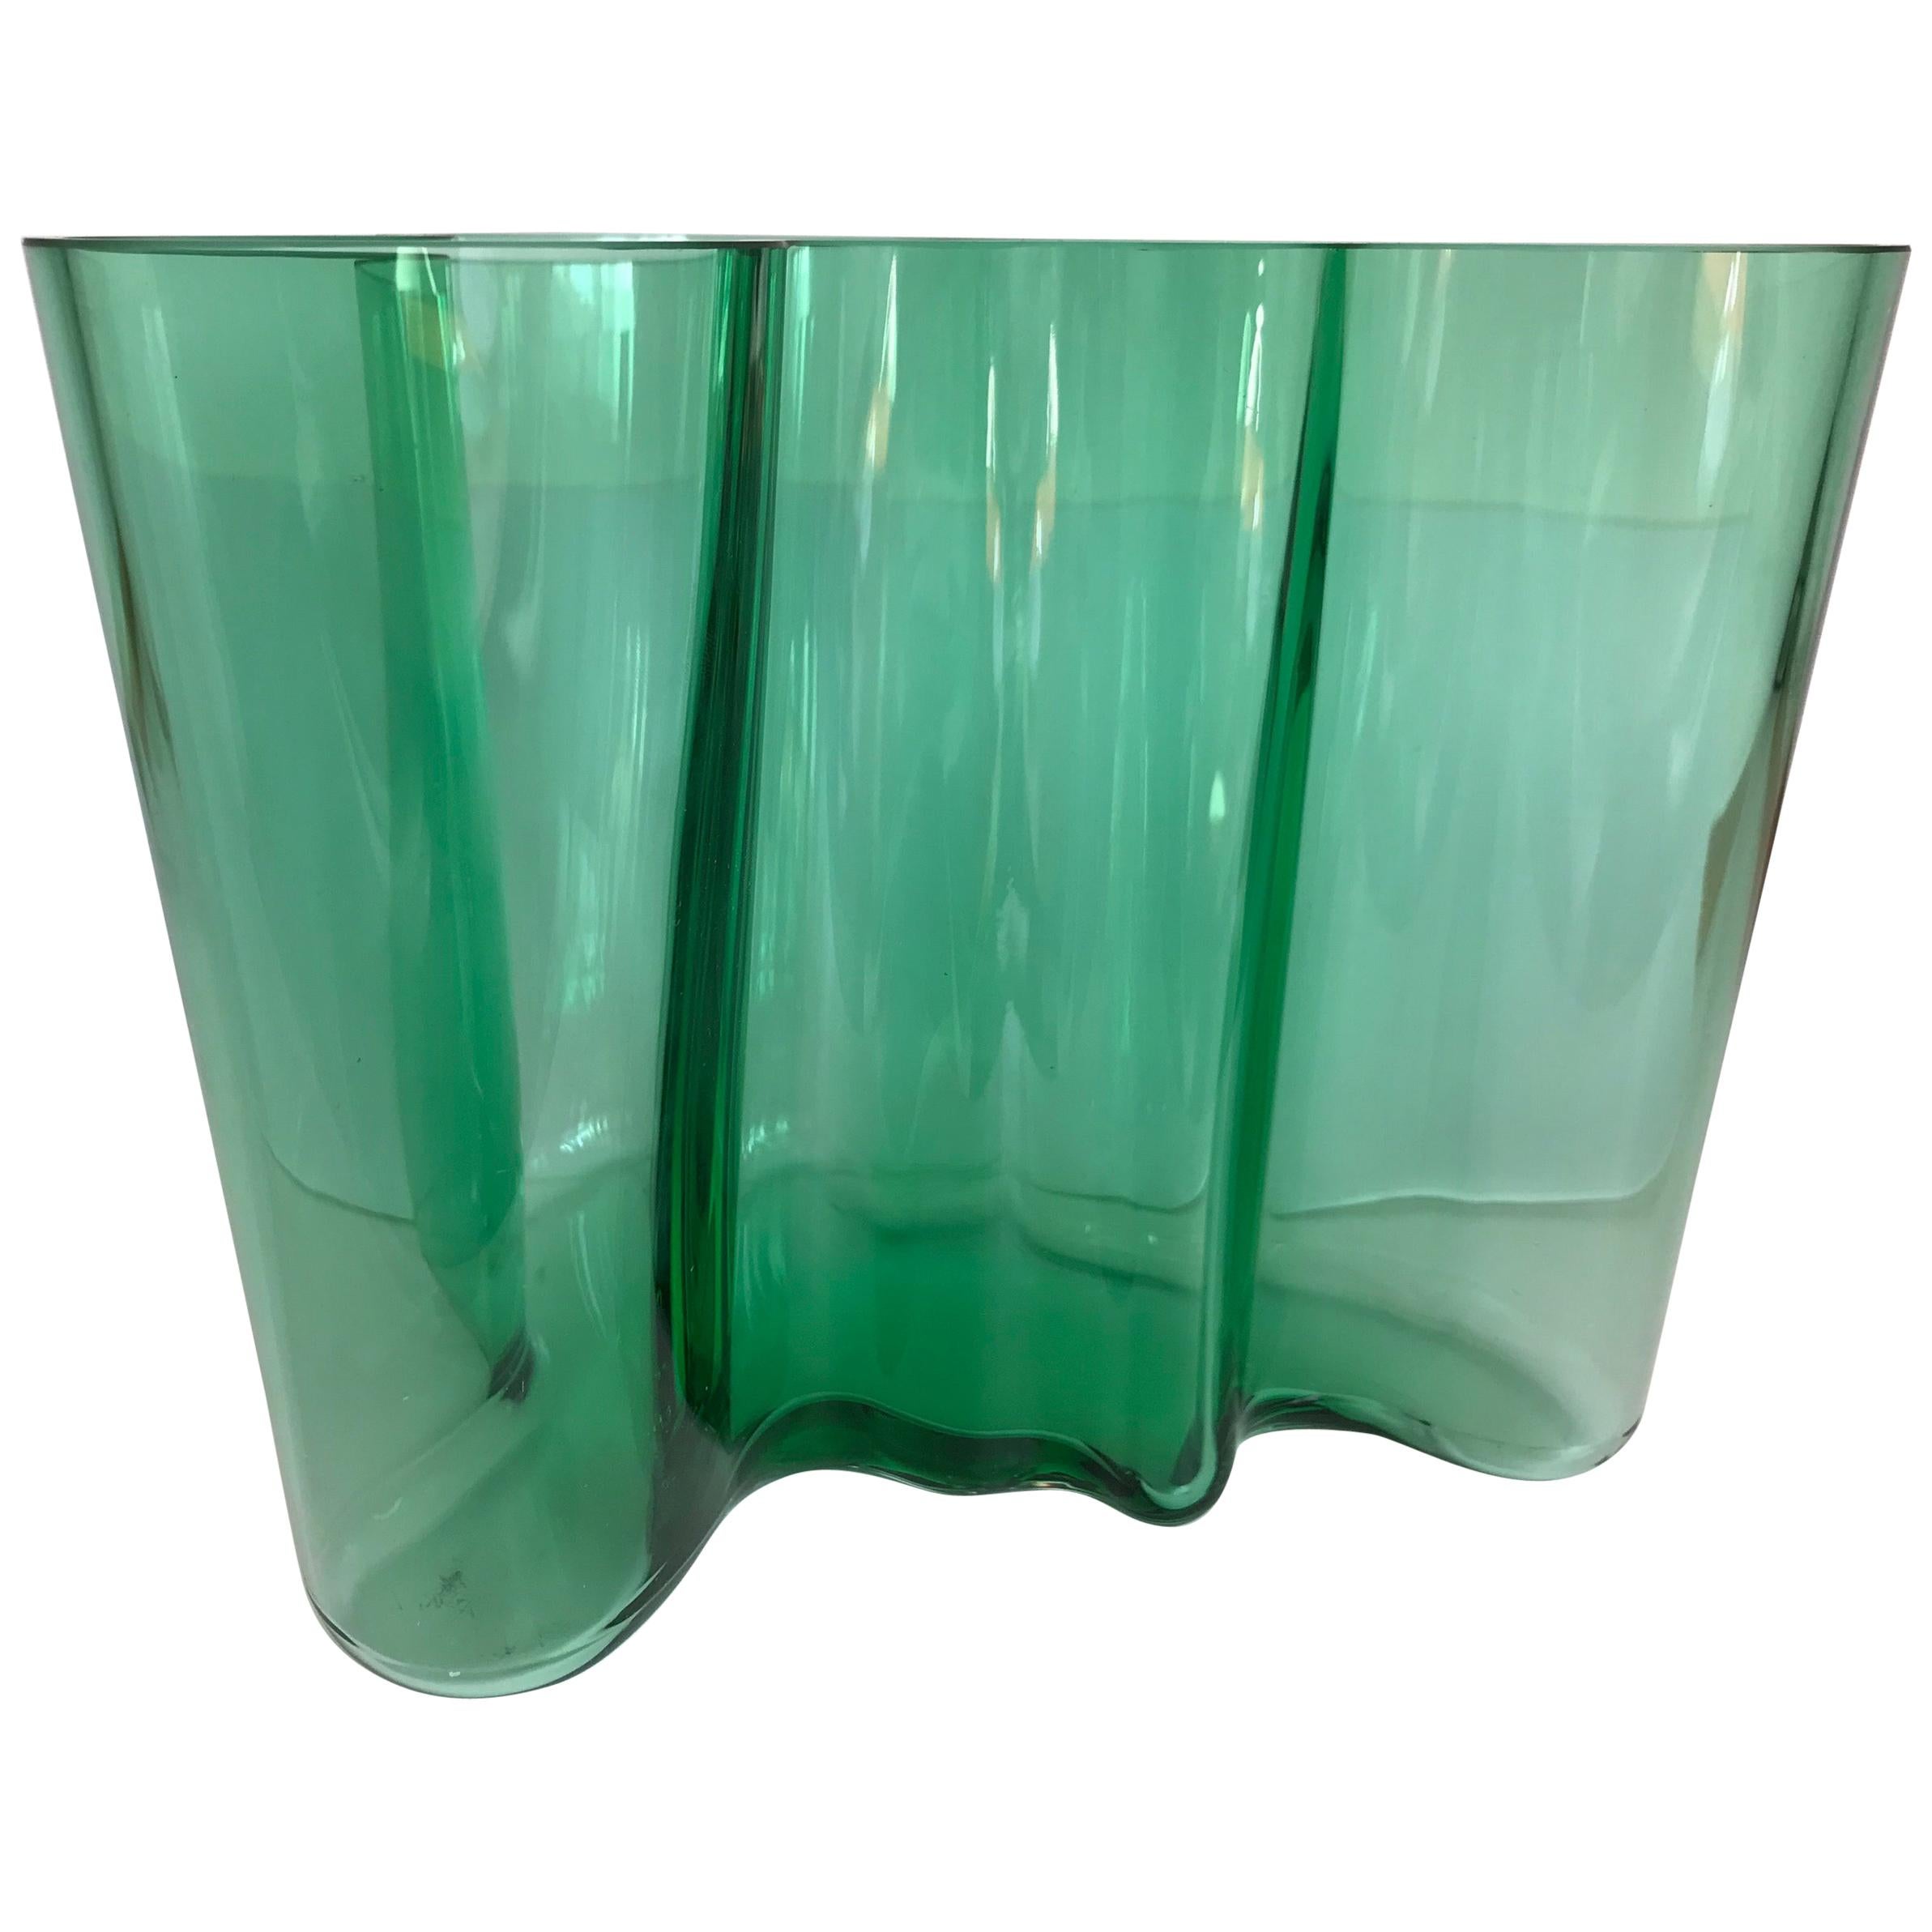 Alvar Aalto Large Savoy Vase in Emerald Green for Iittala